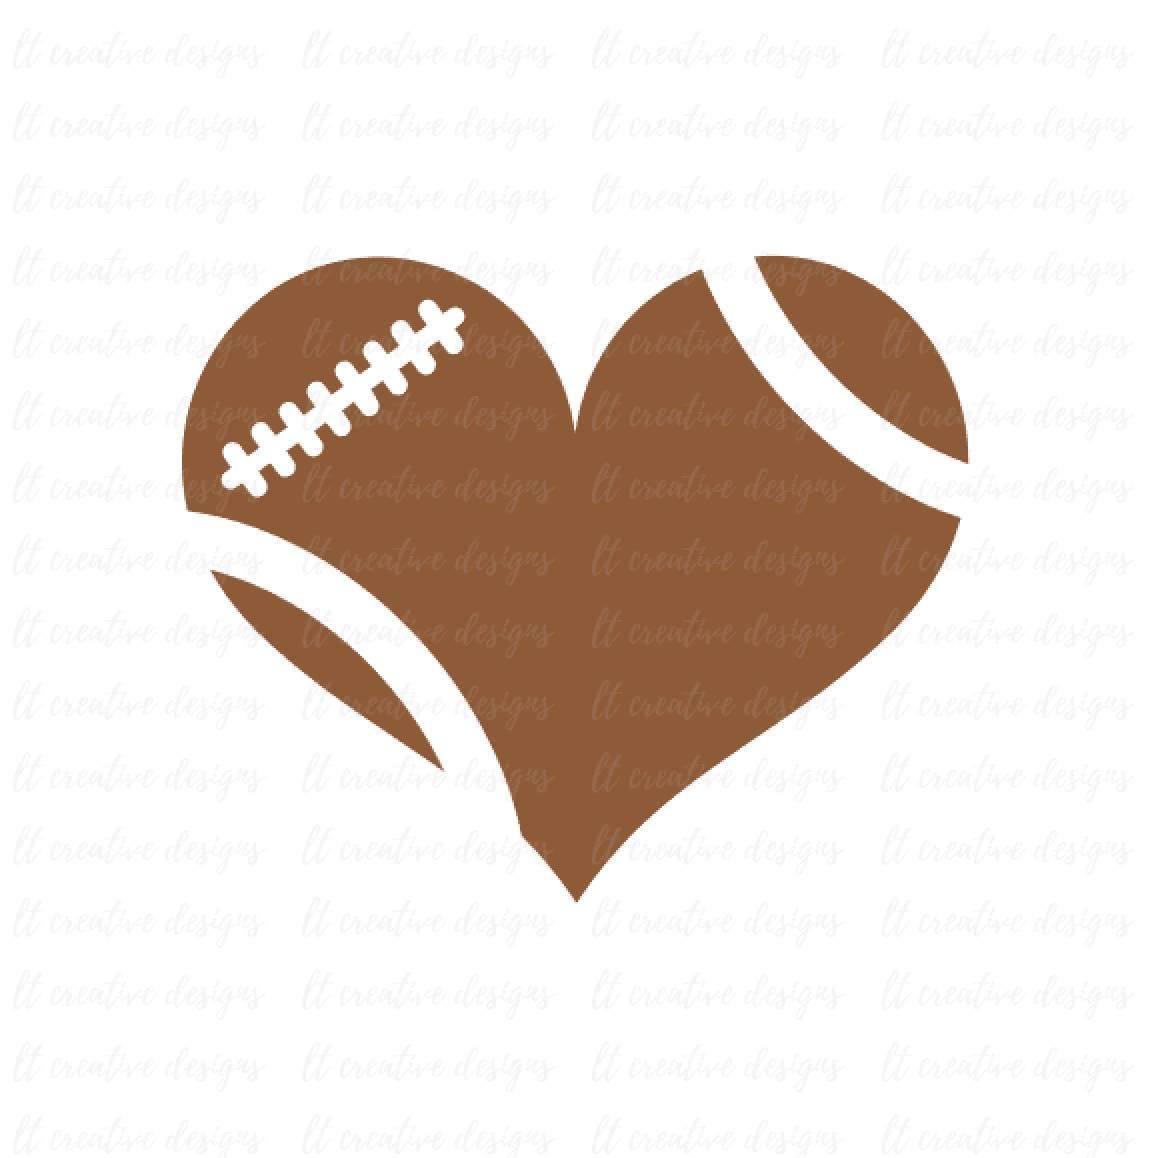 Heart clip art football